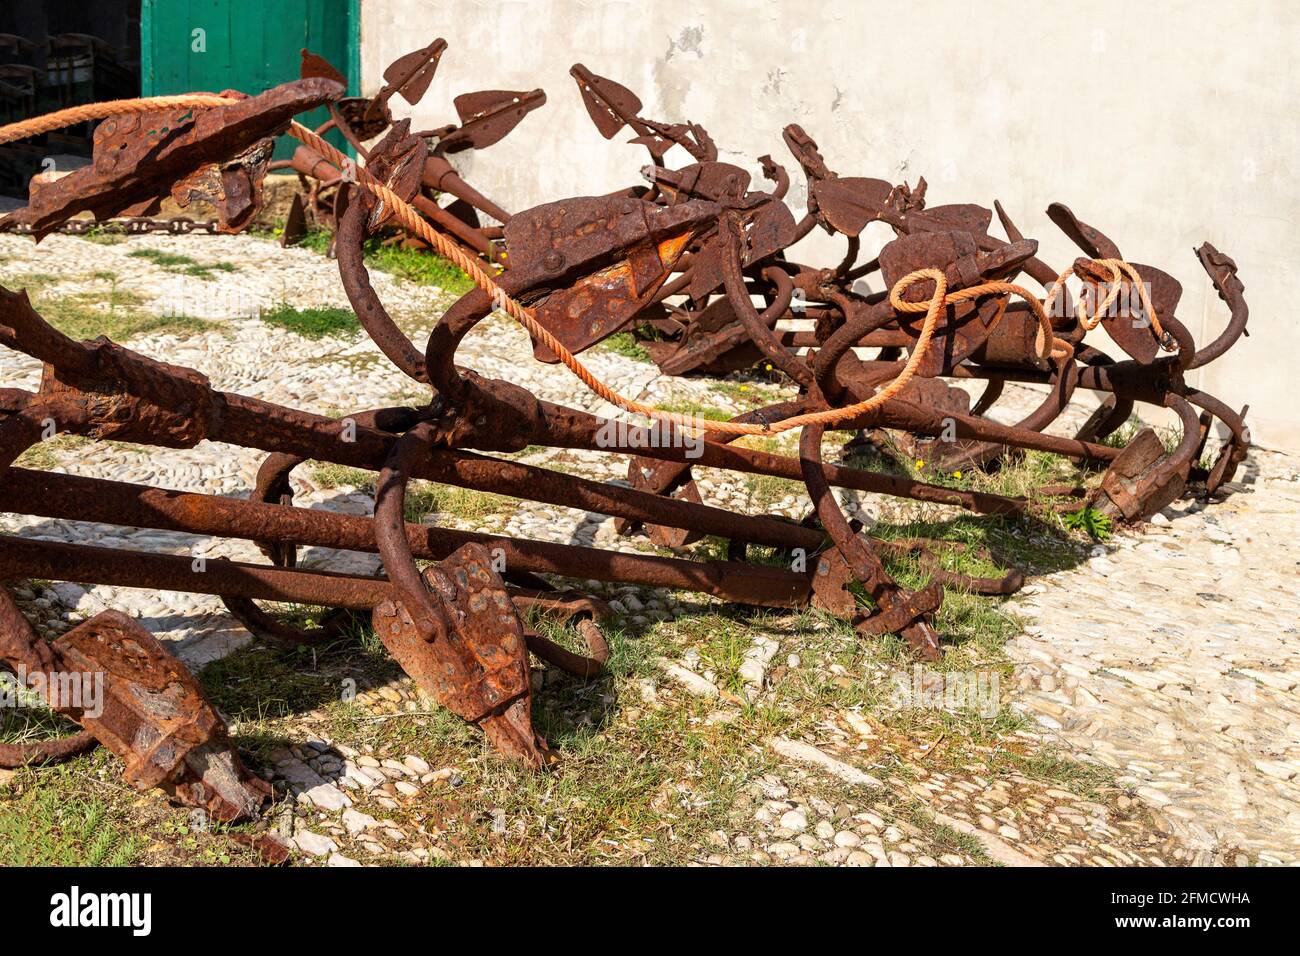 Rusty anchors at Tonnara di Scopello, a former location of tuna fishery, Scopello, Trapani province, Sicily, Italy. Stock Photo